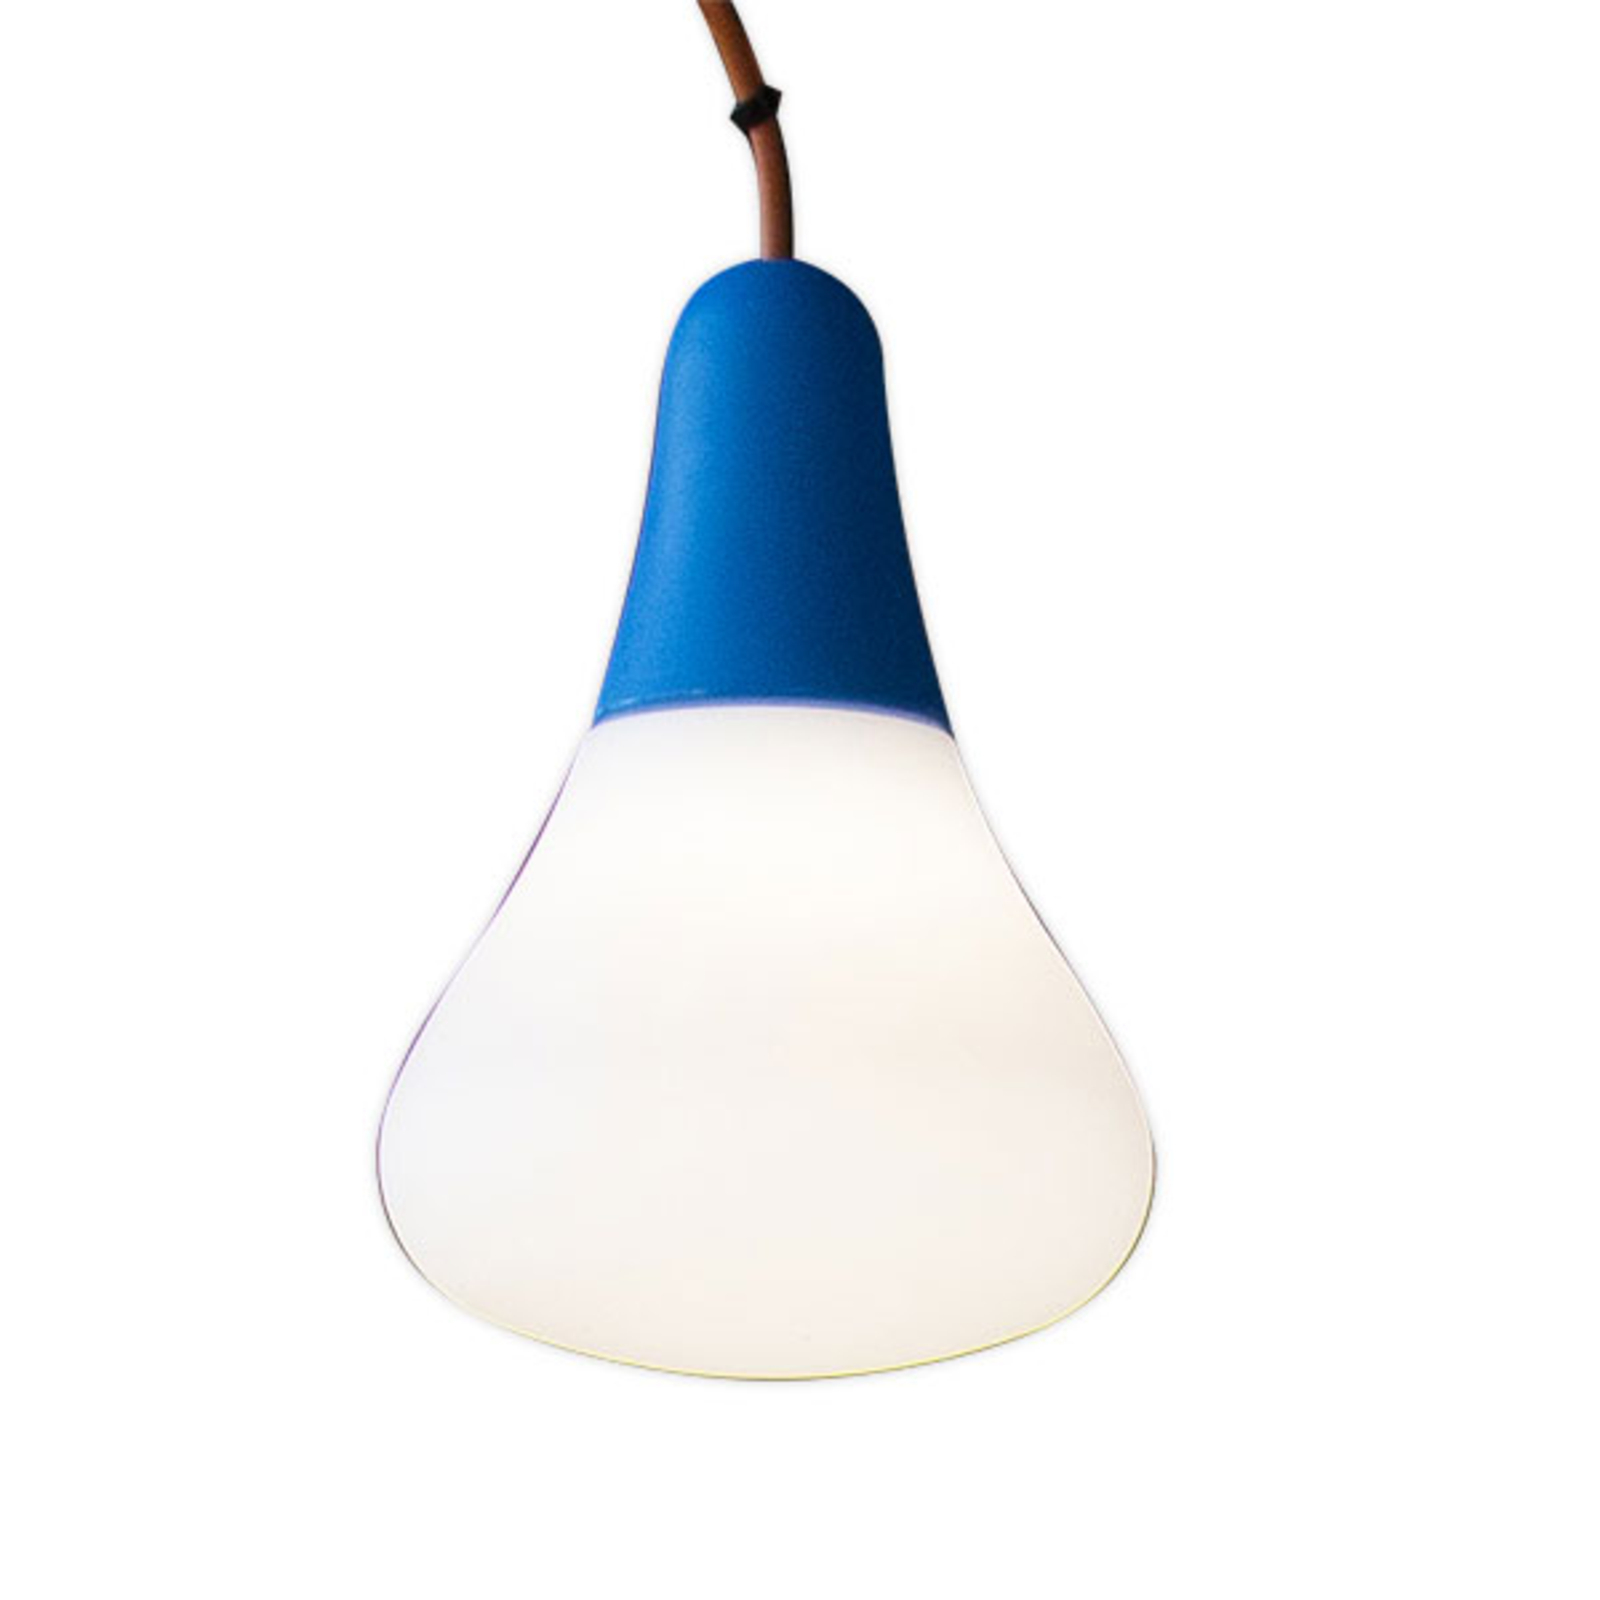 Martinelli Luce Ciulifruli hanglamp, blauw